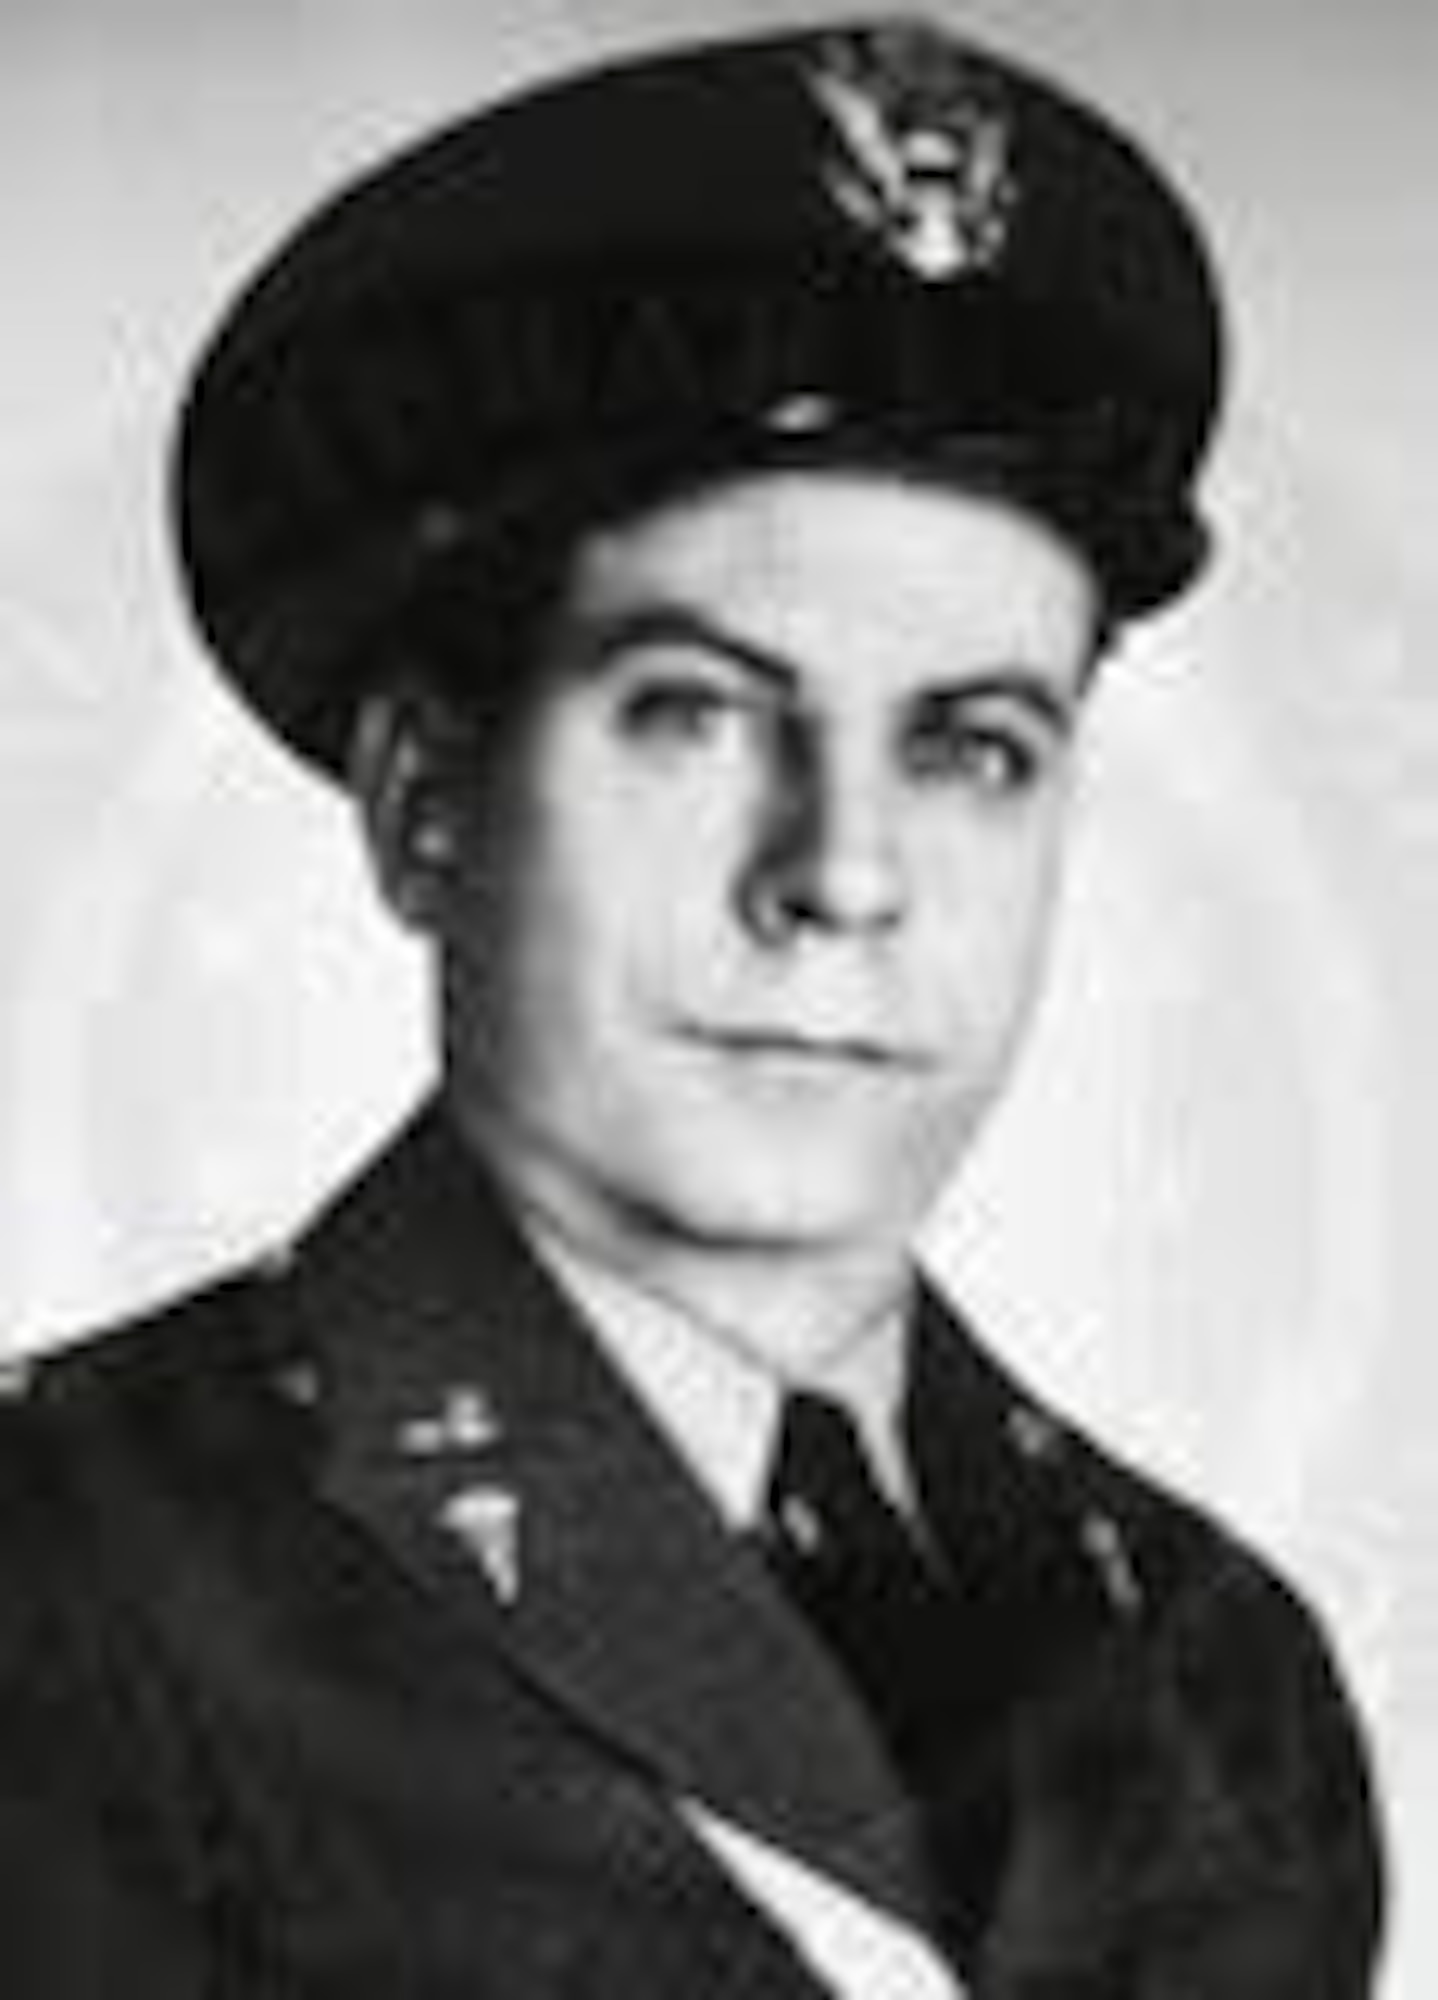 1st Lt. William R. Schick military photo.